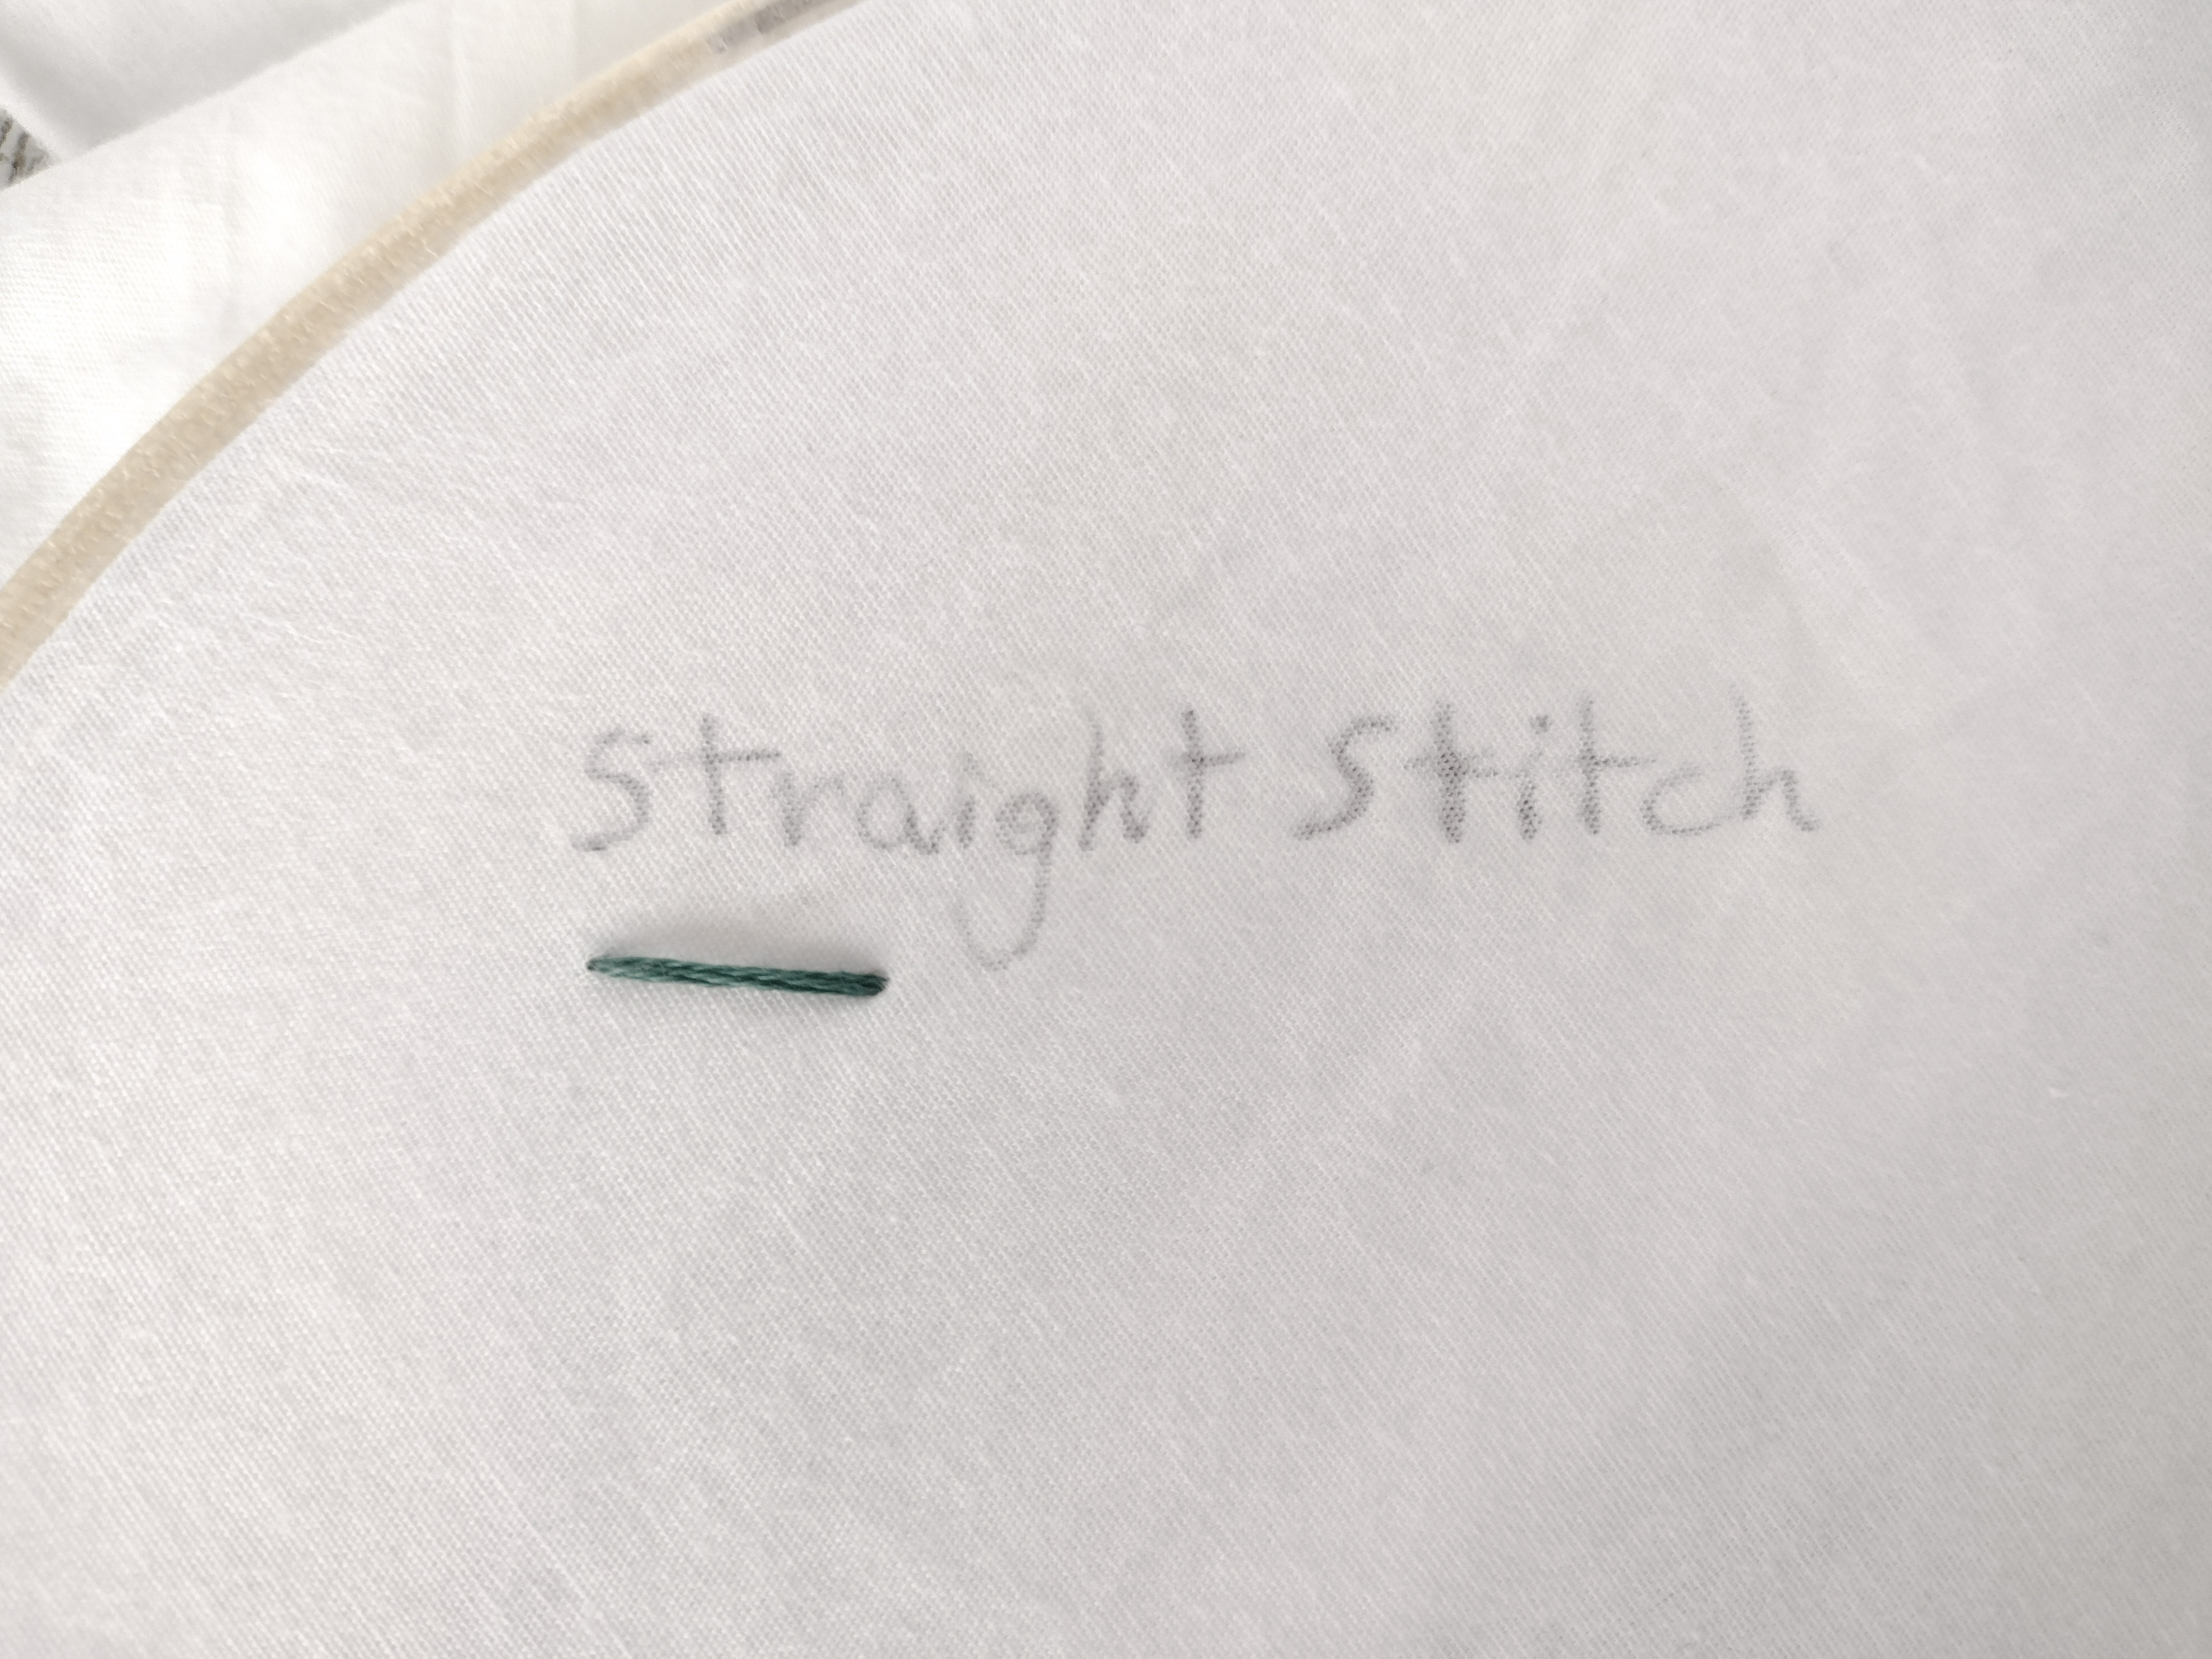 Straight stitch